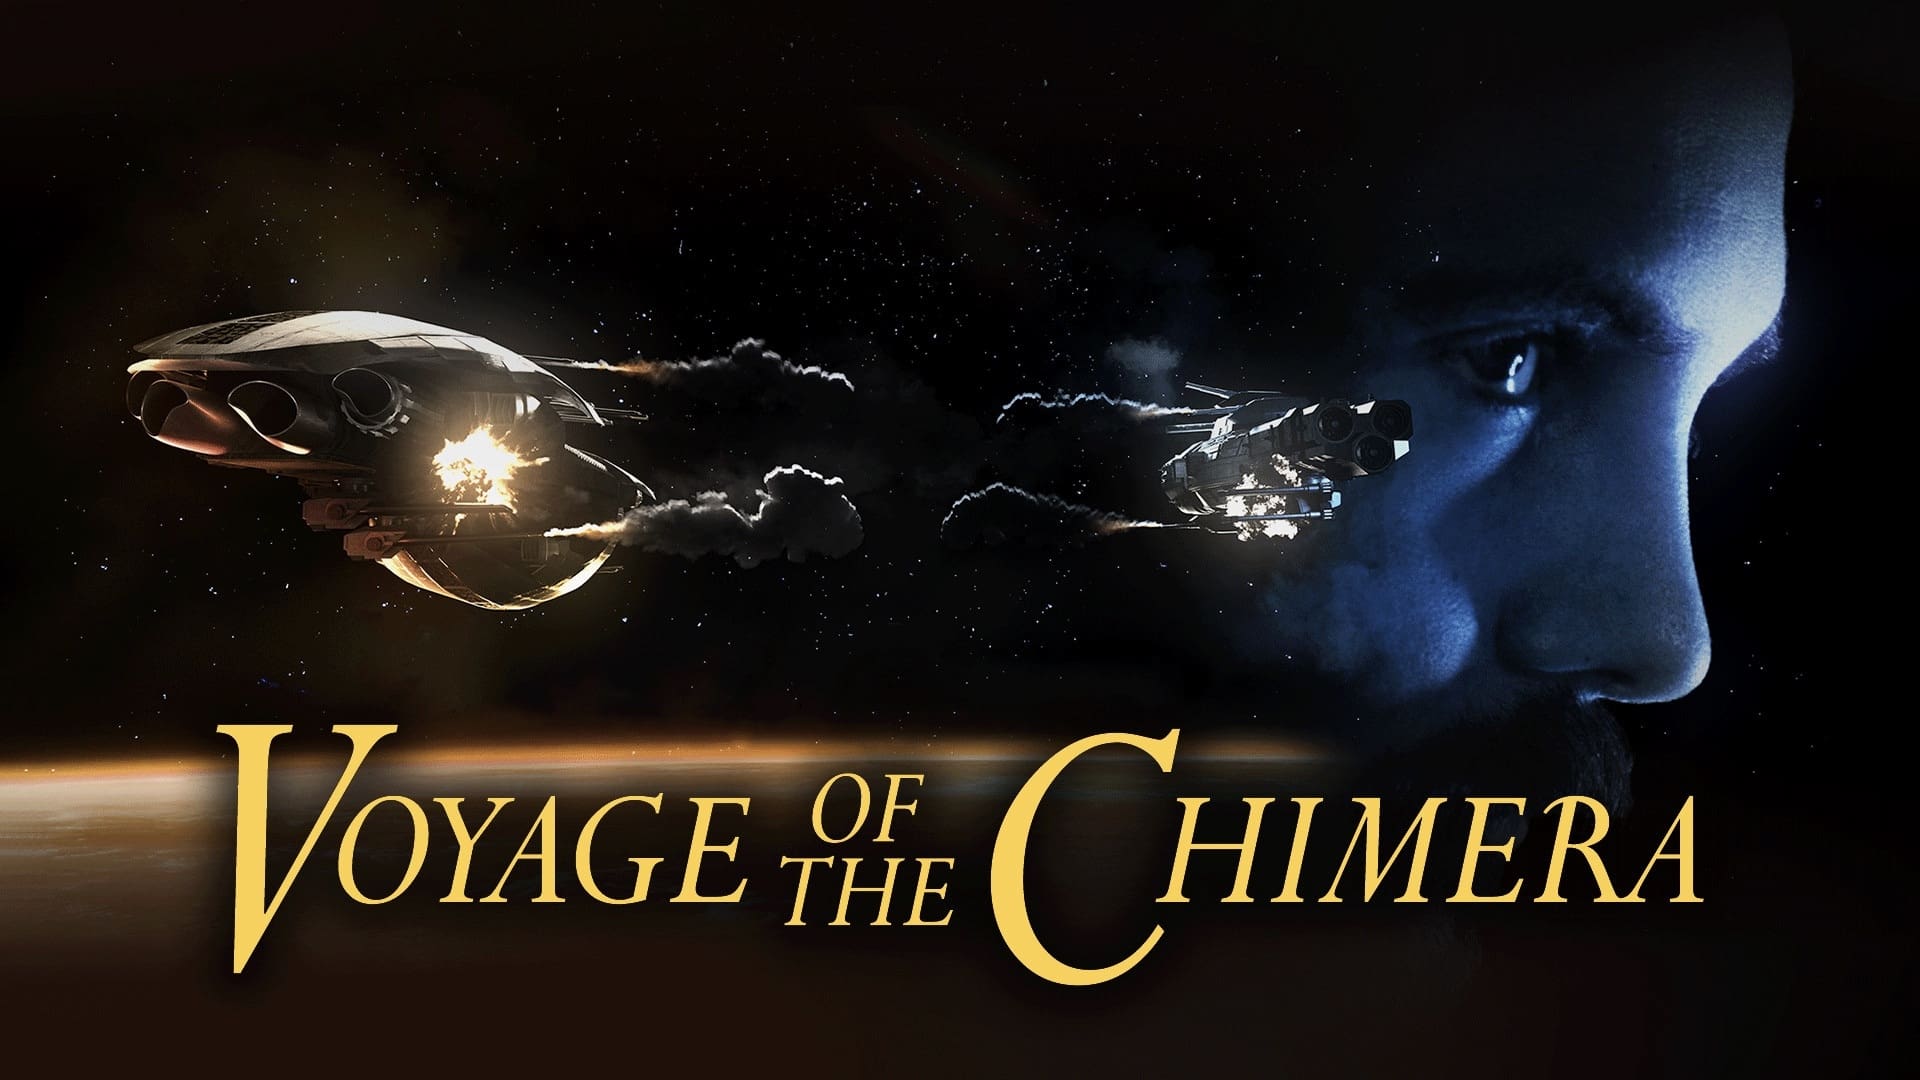 Voyage of the Chimera